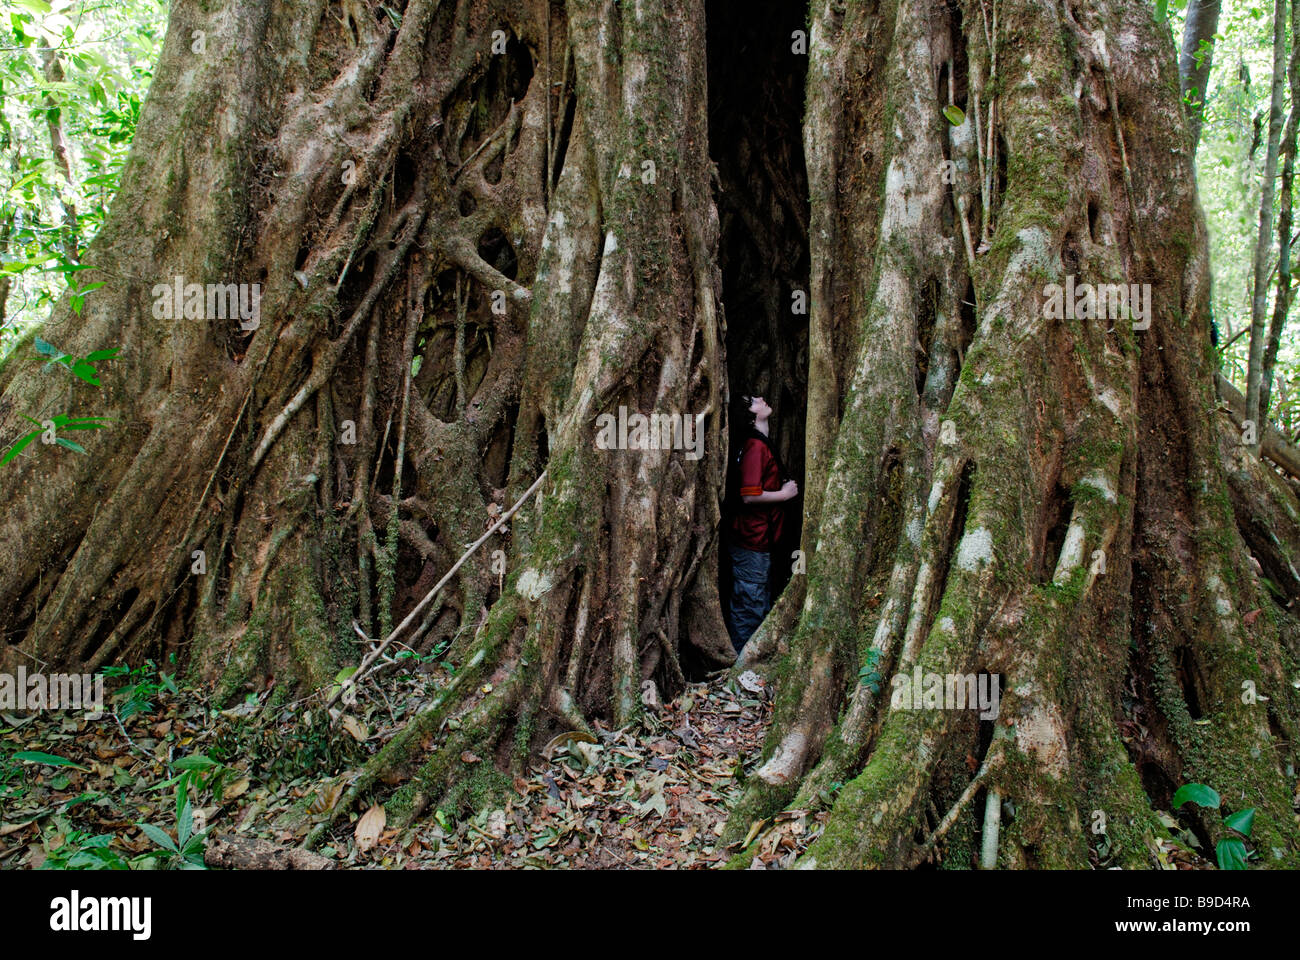 Boy stands inside a giant strangler fig, Ficus aurea. Stock Photo